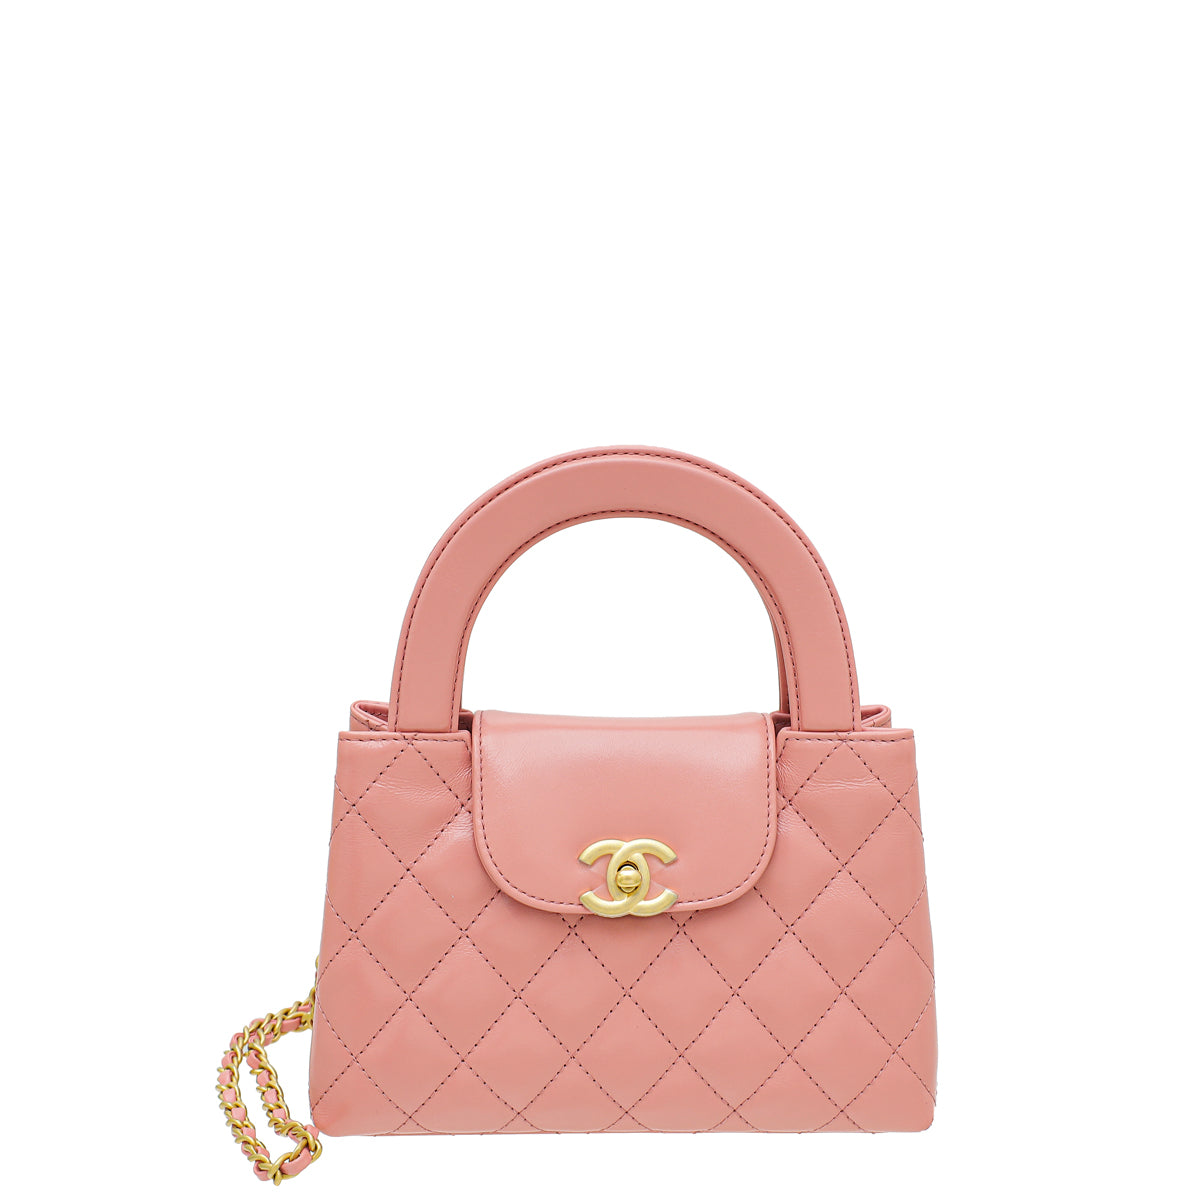 Chanel Coral Pink Mini Kelly Bag